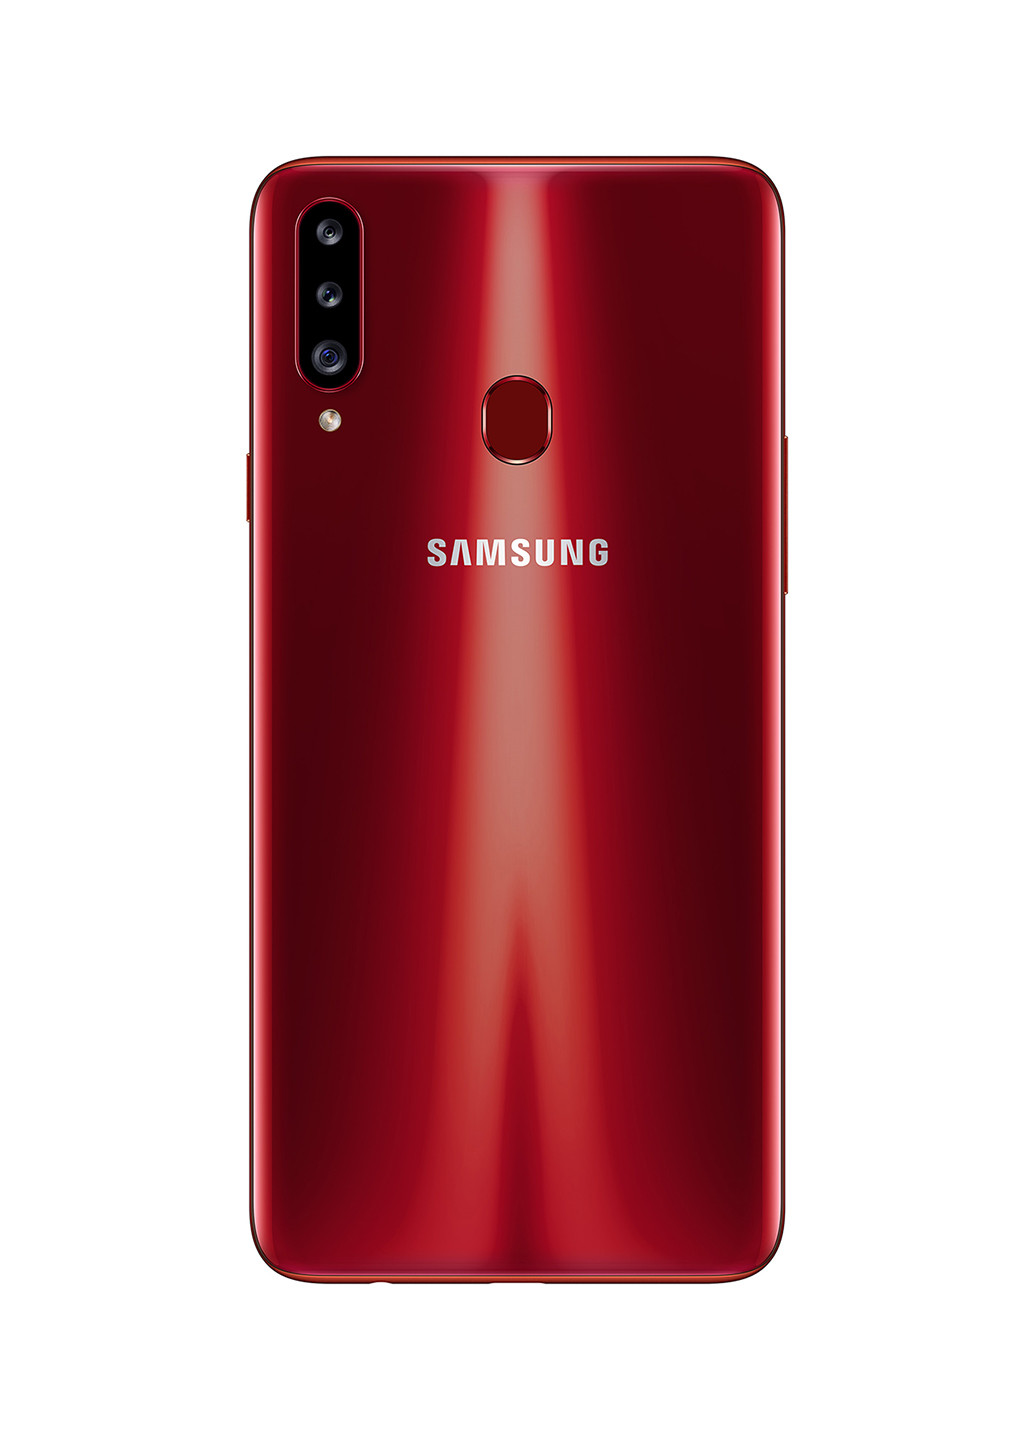 Смартфон Samsung galaxy a20s 3/32gb red (154686400)